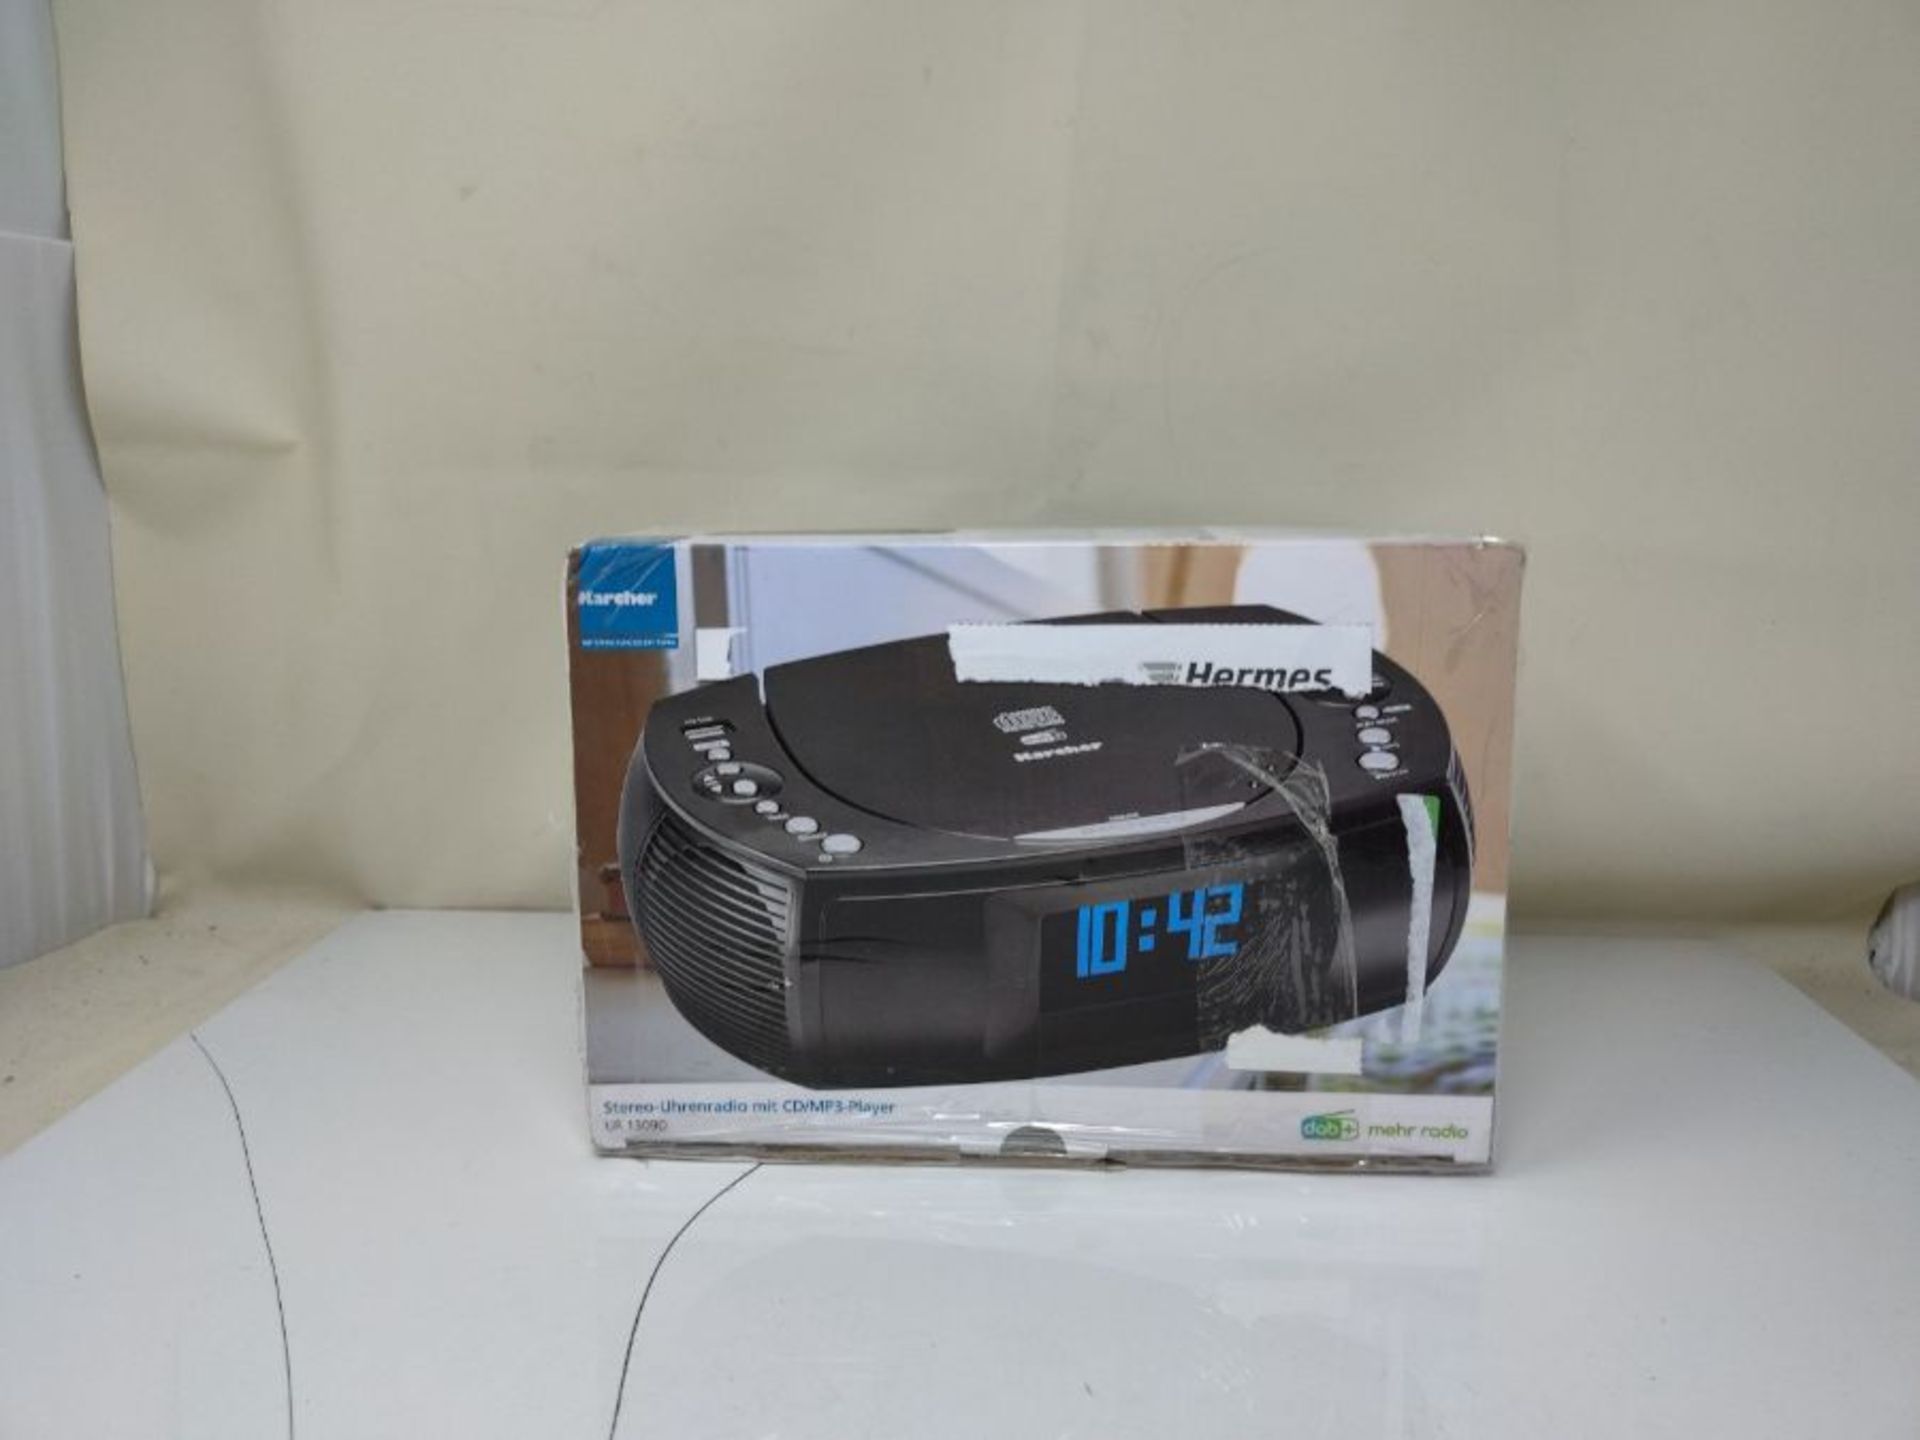 RRP £59.00 Karcher UR 1309D Radiowecker mit MP3 / CD Player und DAB+ / UKW Radio (je 20 Senderspe - Image 2 of 3